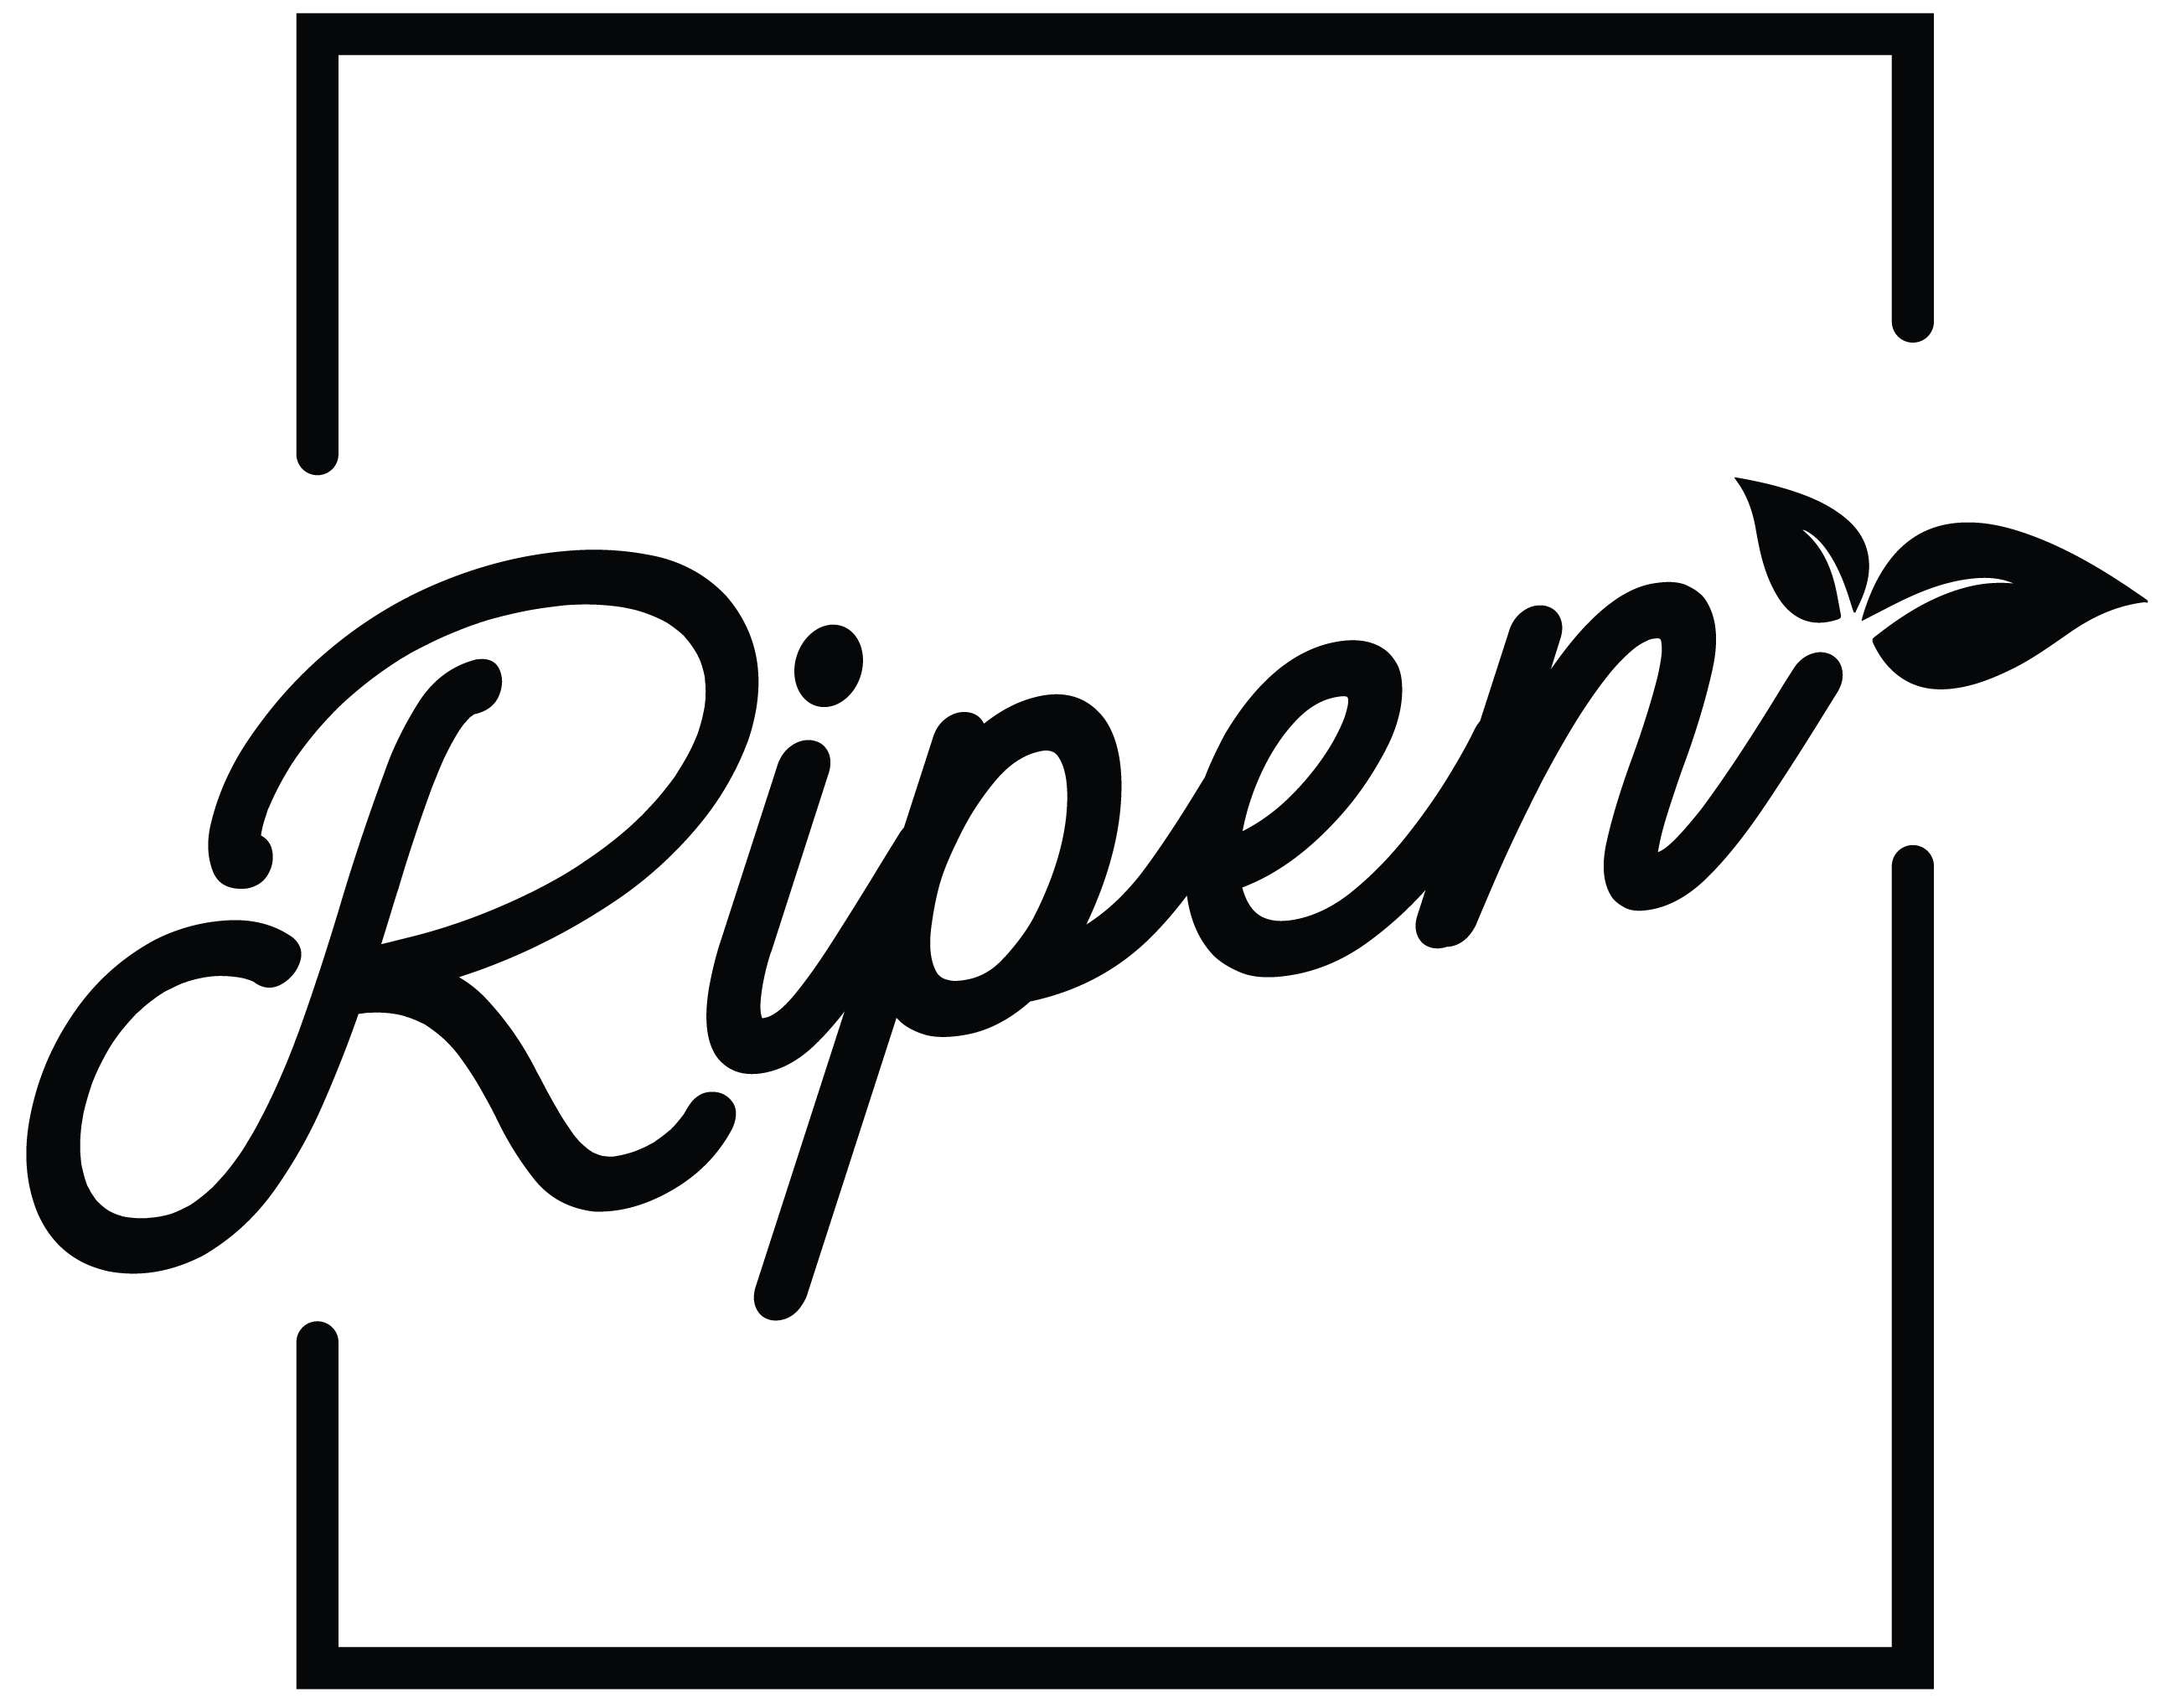 Ripen Company